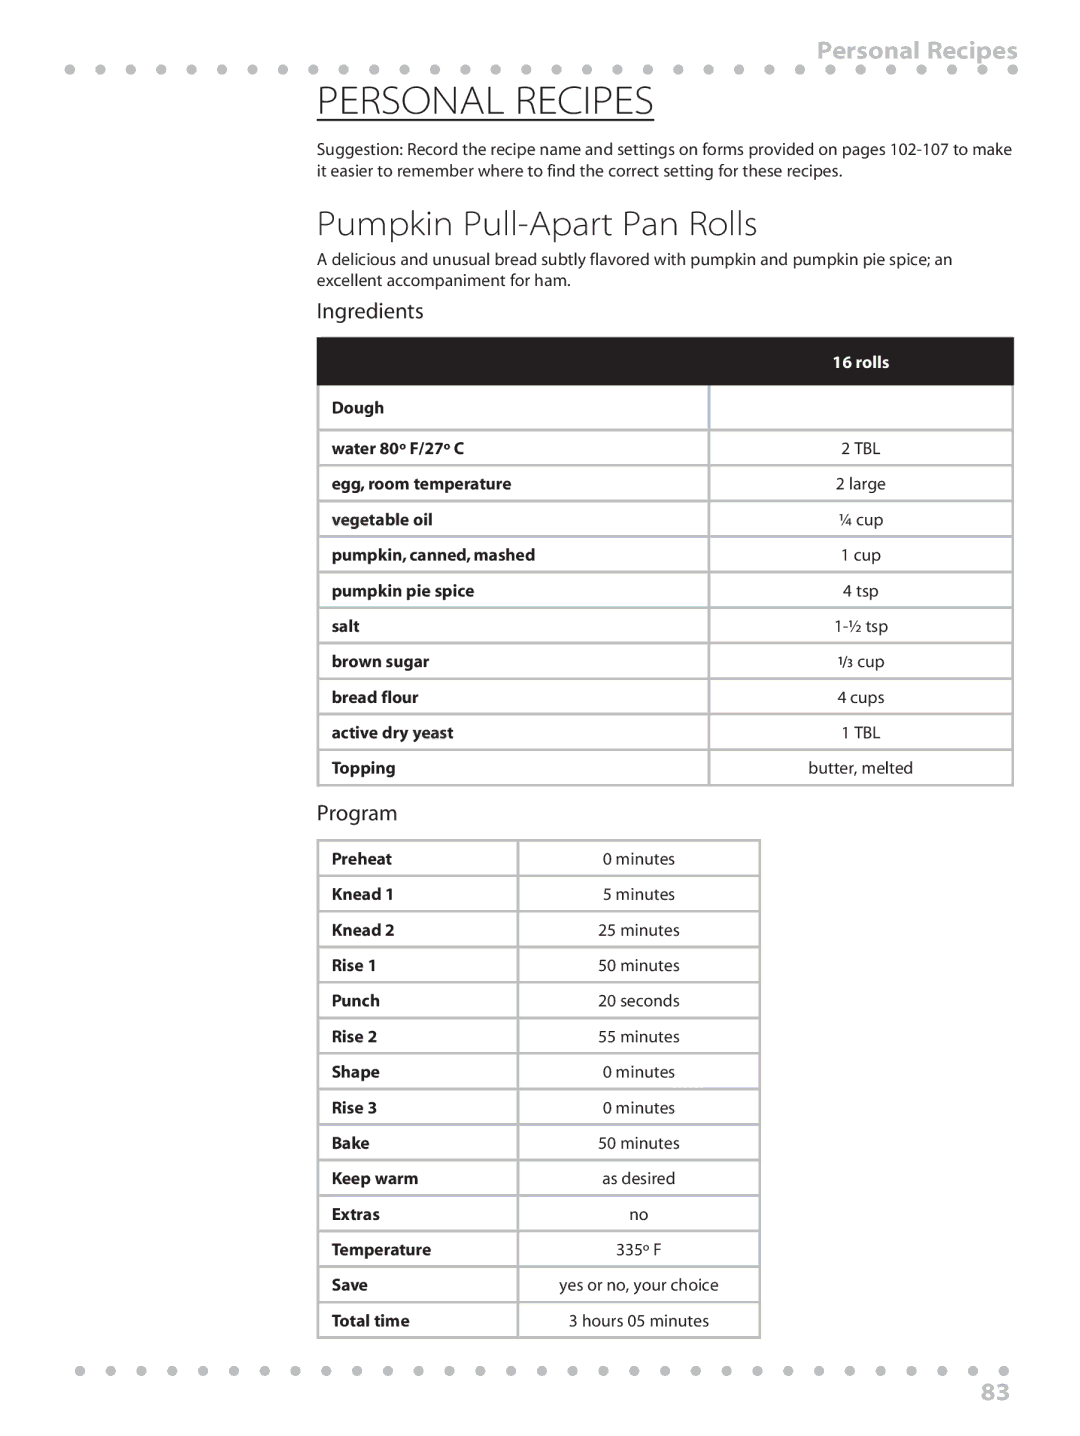 Toastmaster WBYBM1 manual Pumpkin Pull-Apart Pan Rolls, Personal Recipes, Ingredients, Program 